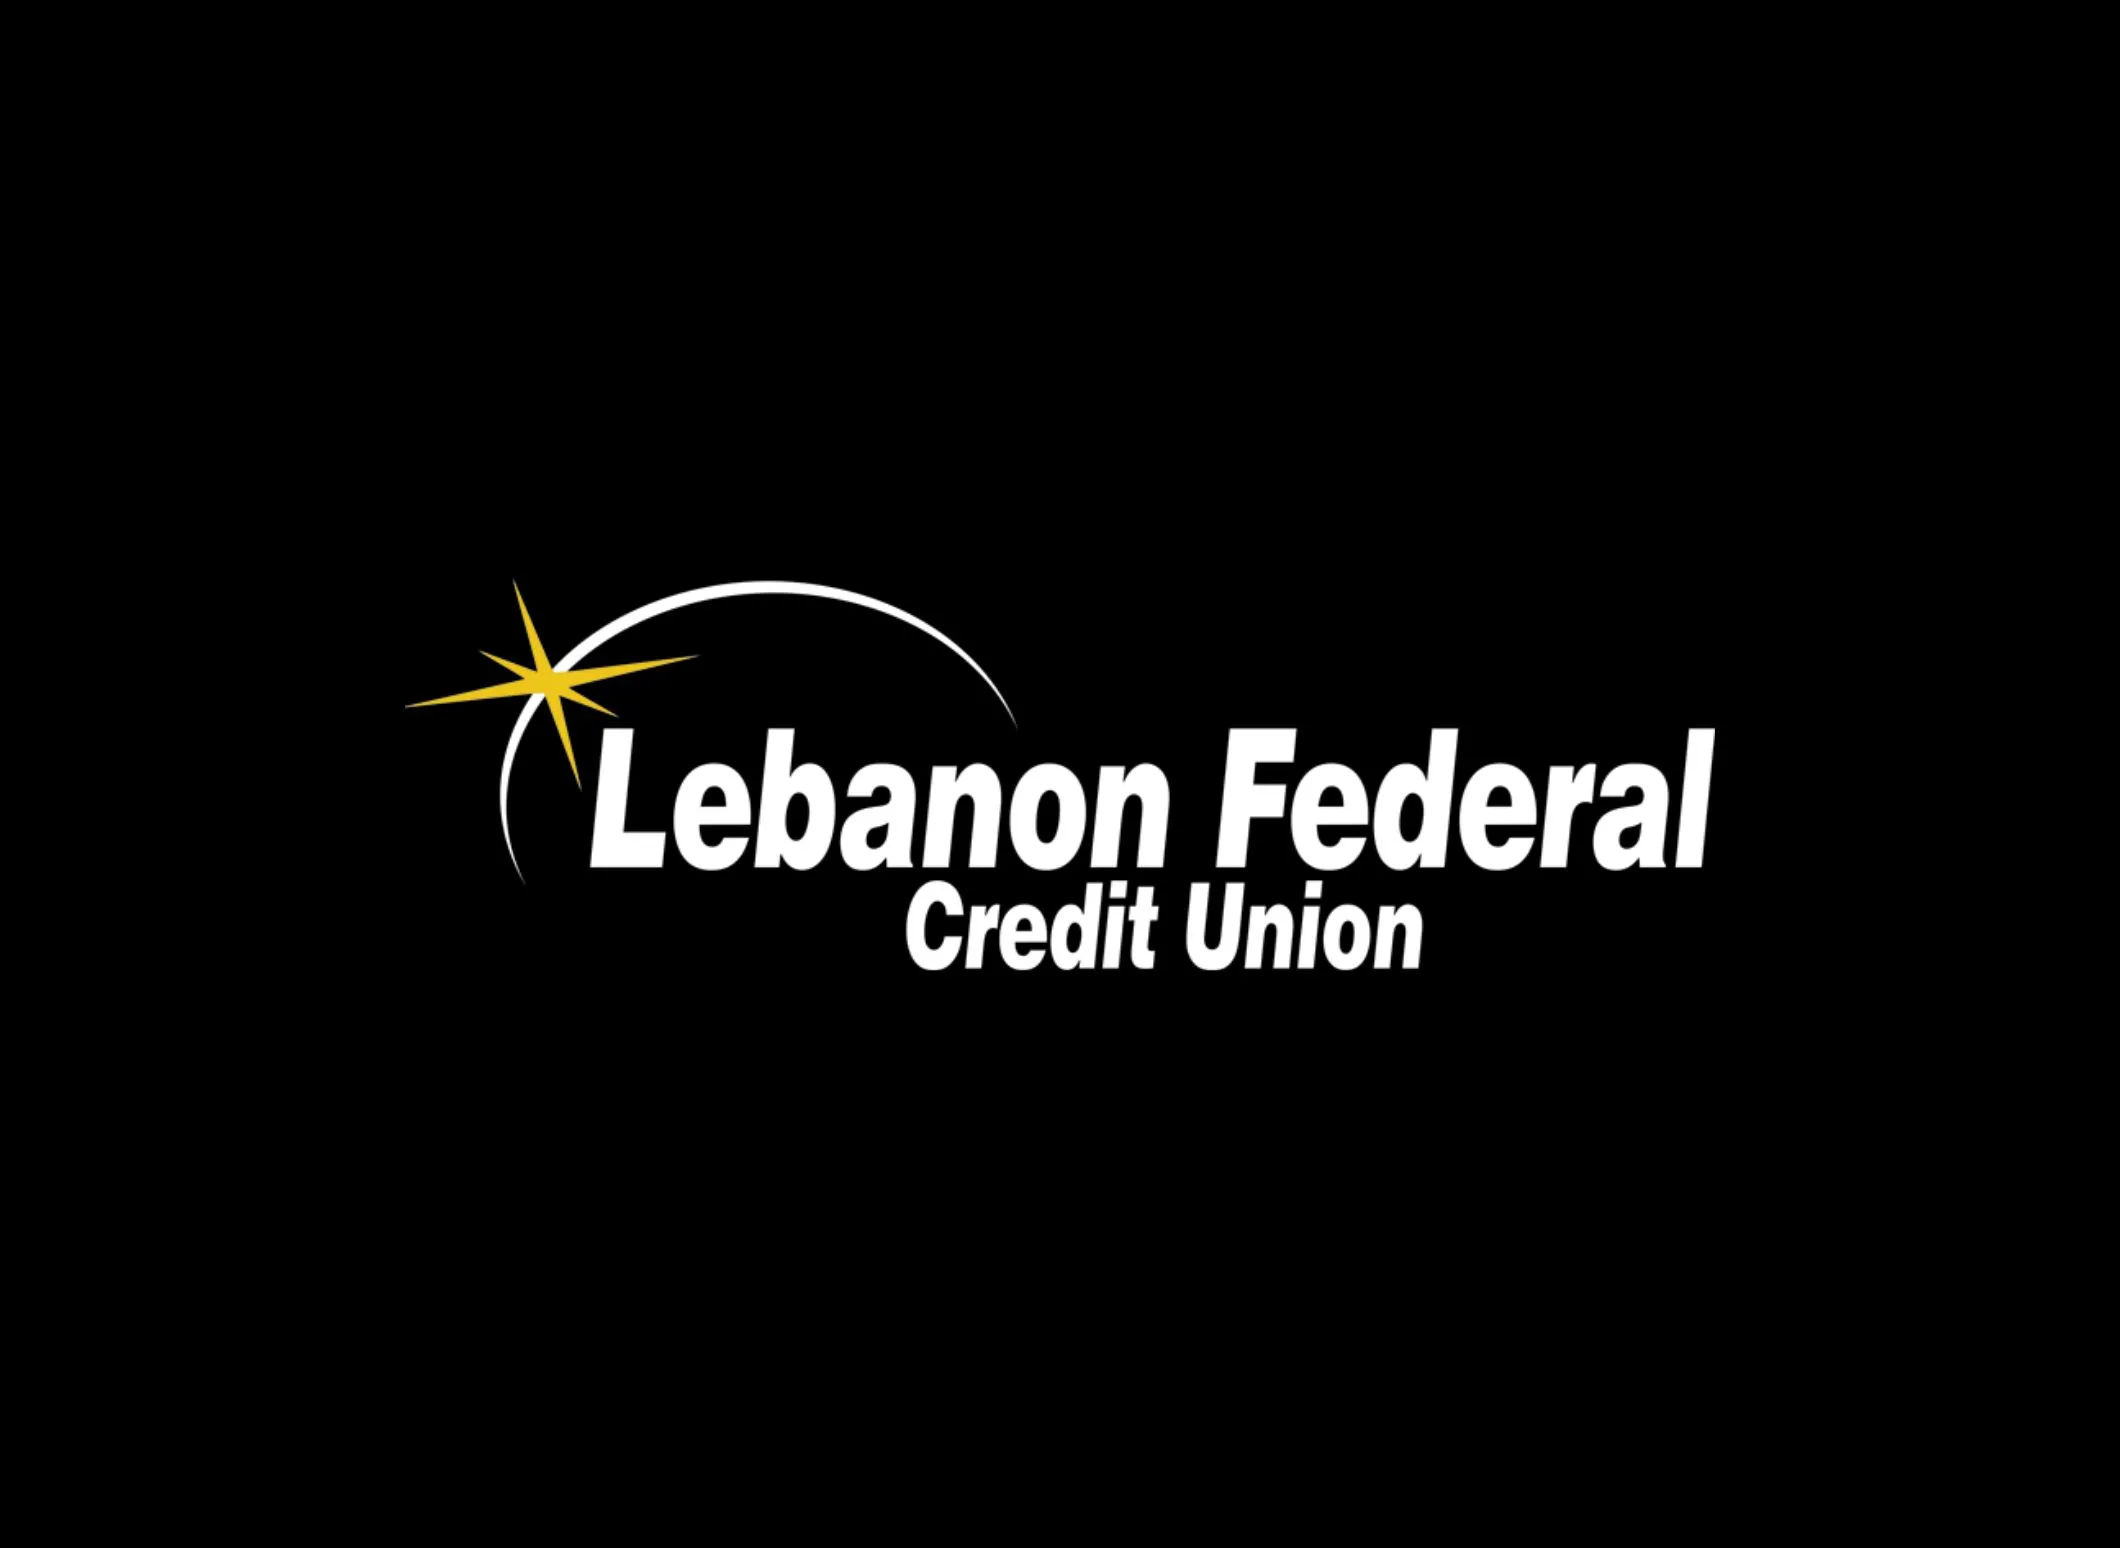 Lebanon Federal Credit Union logo